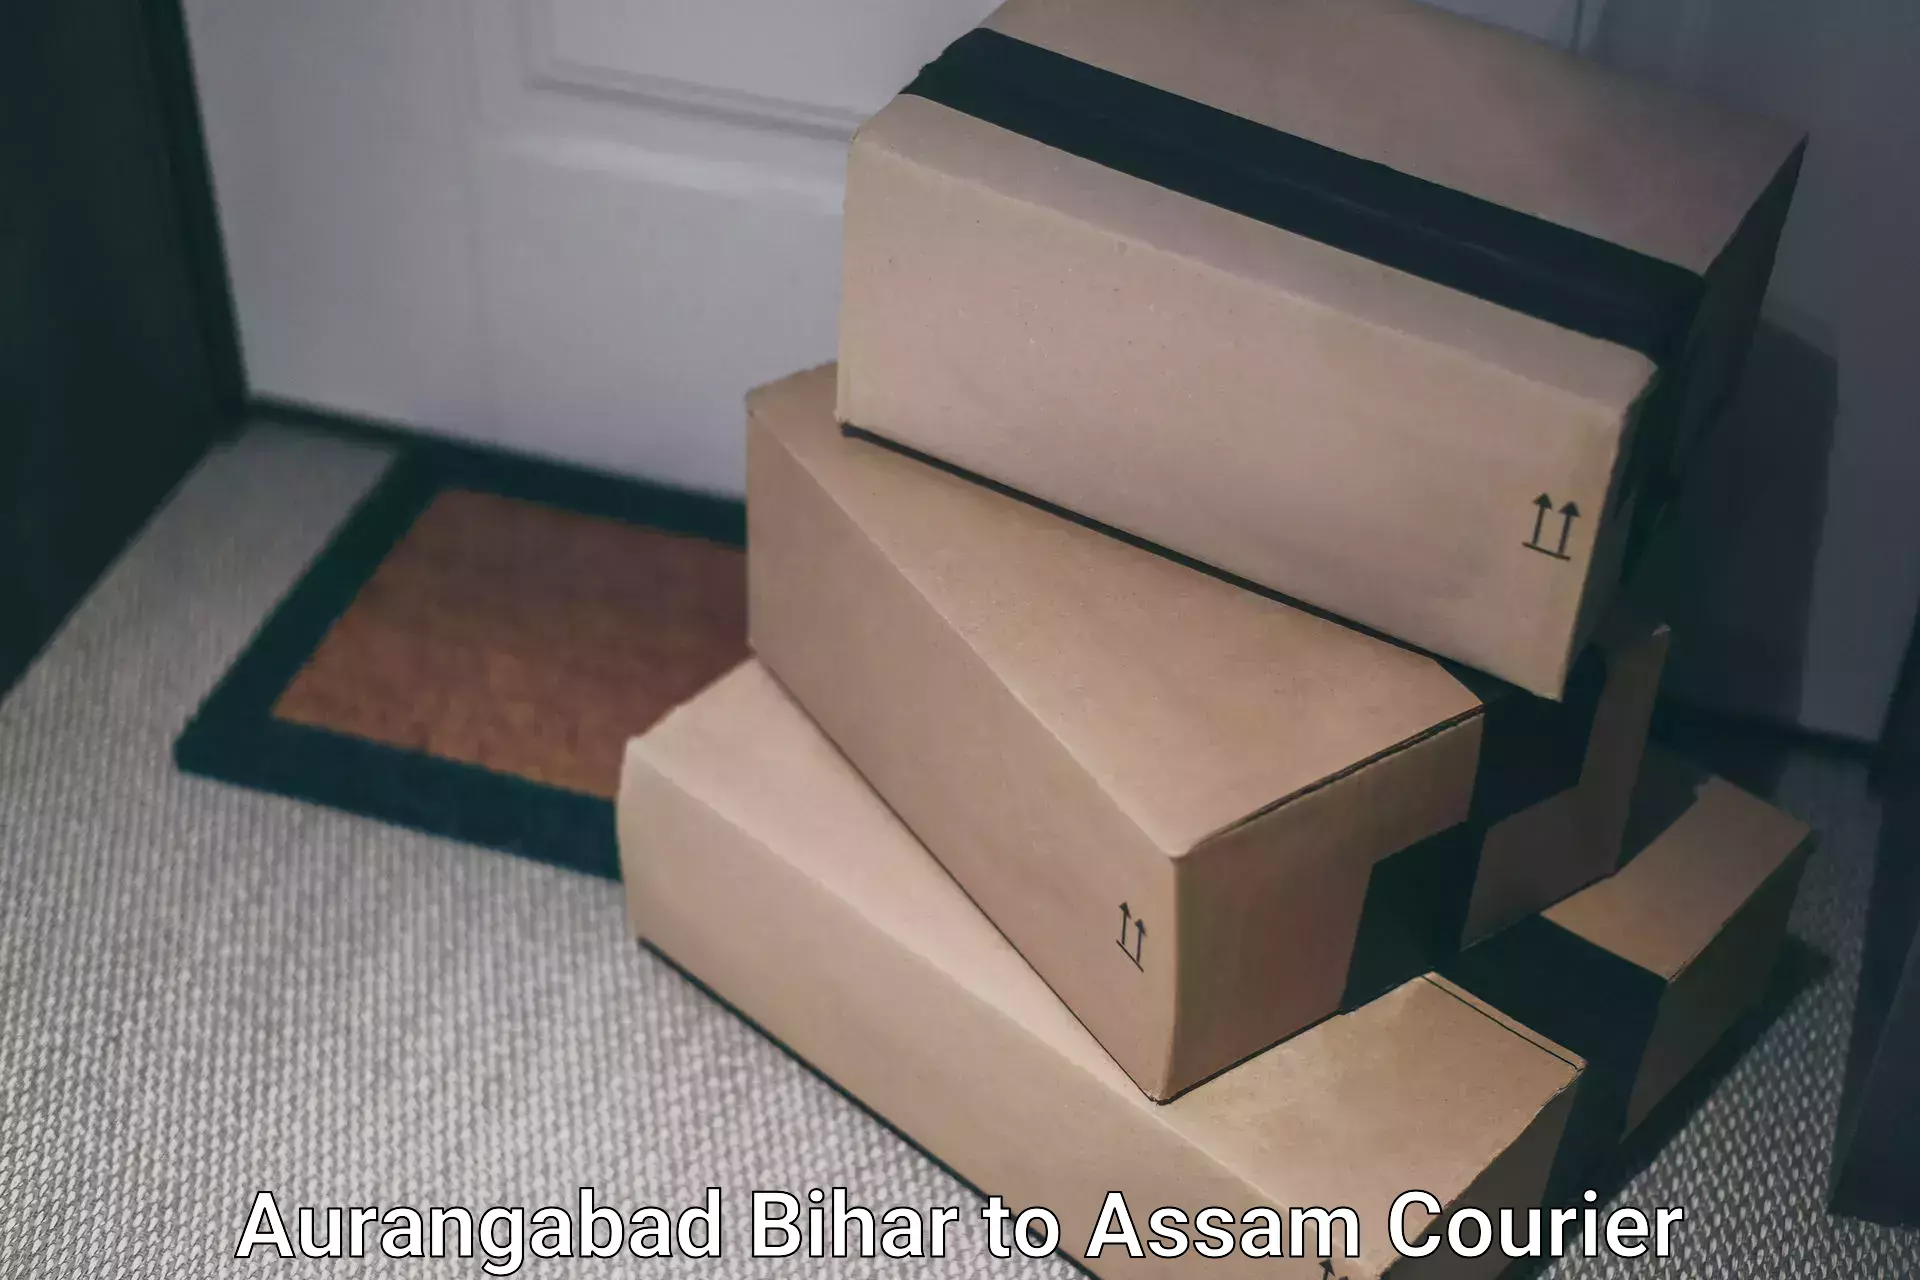 Package delivery network Aurangabad Bihar to Baihata